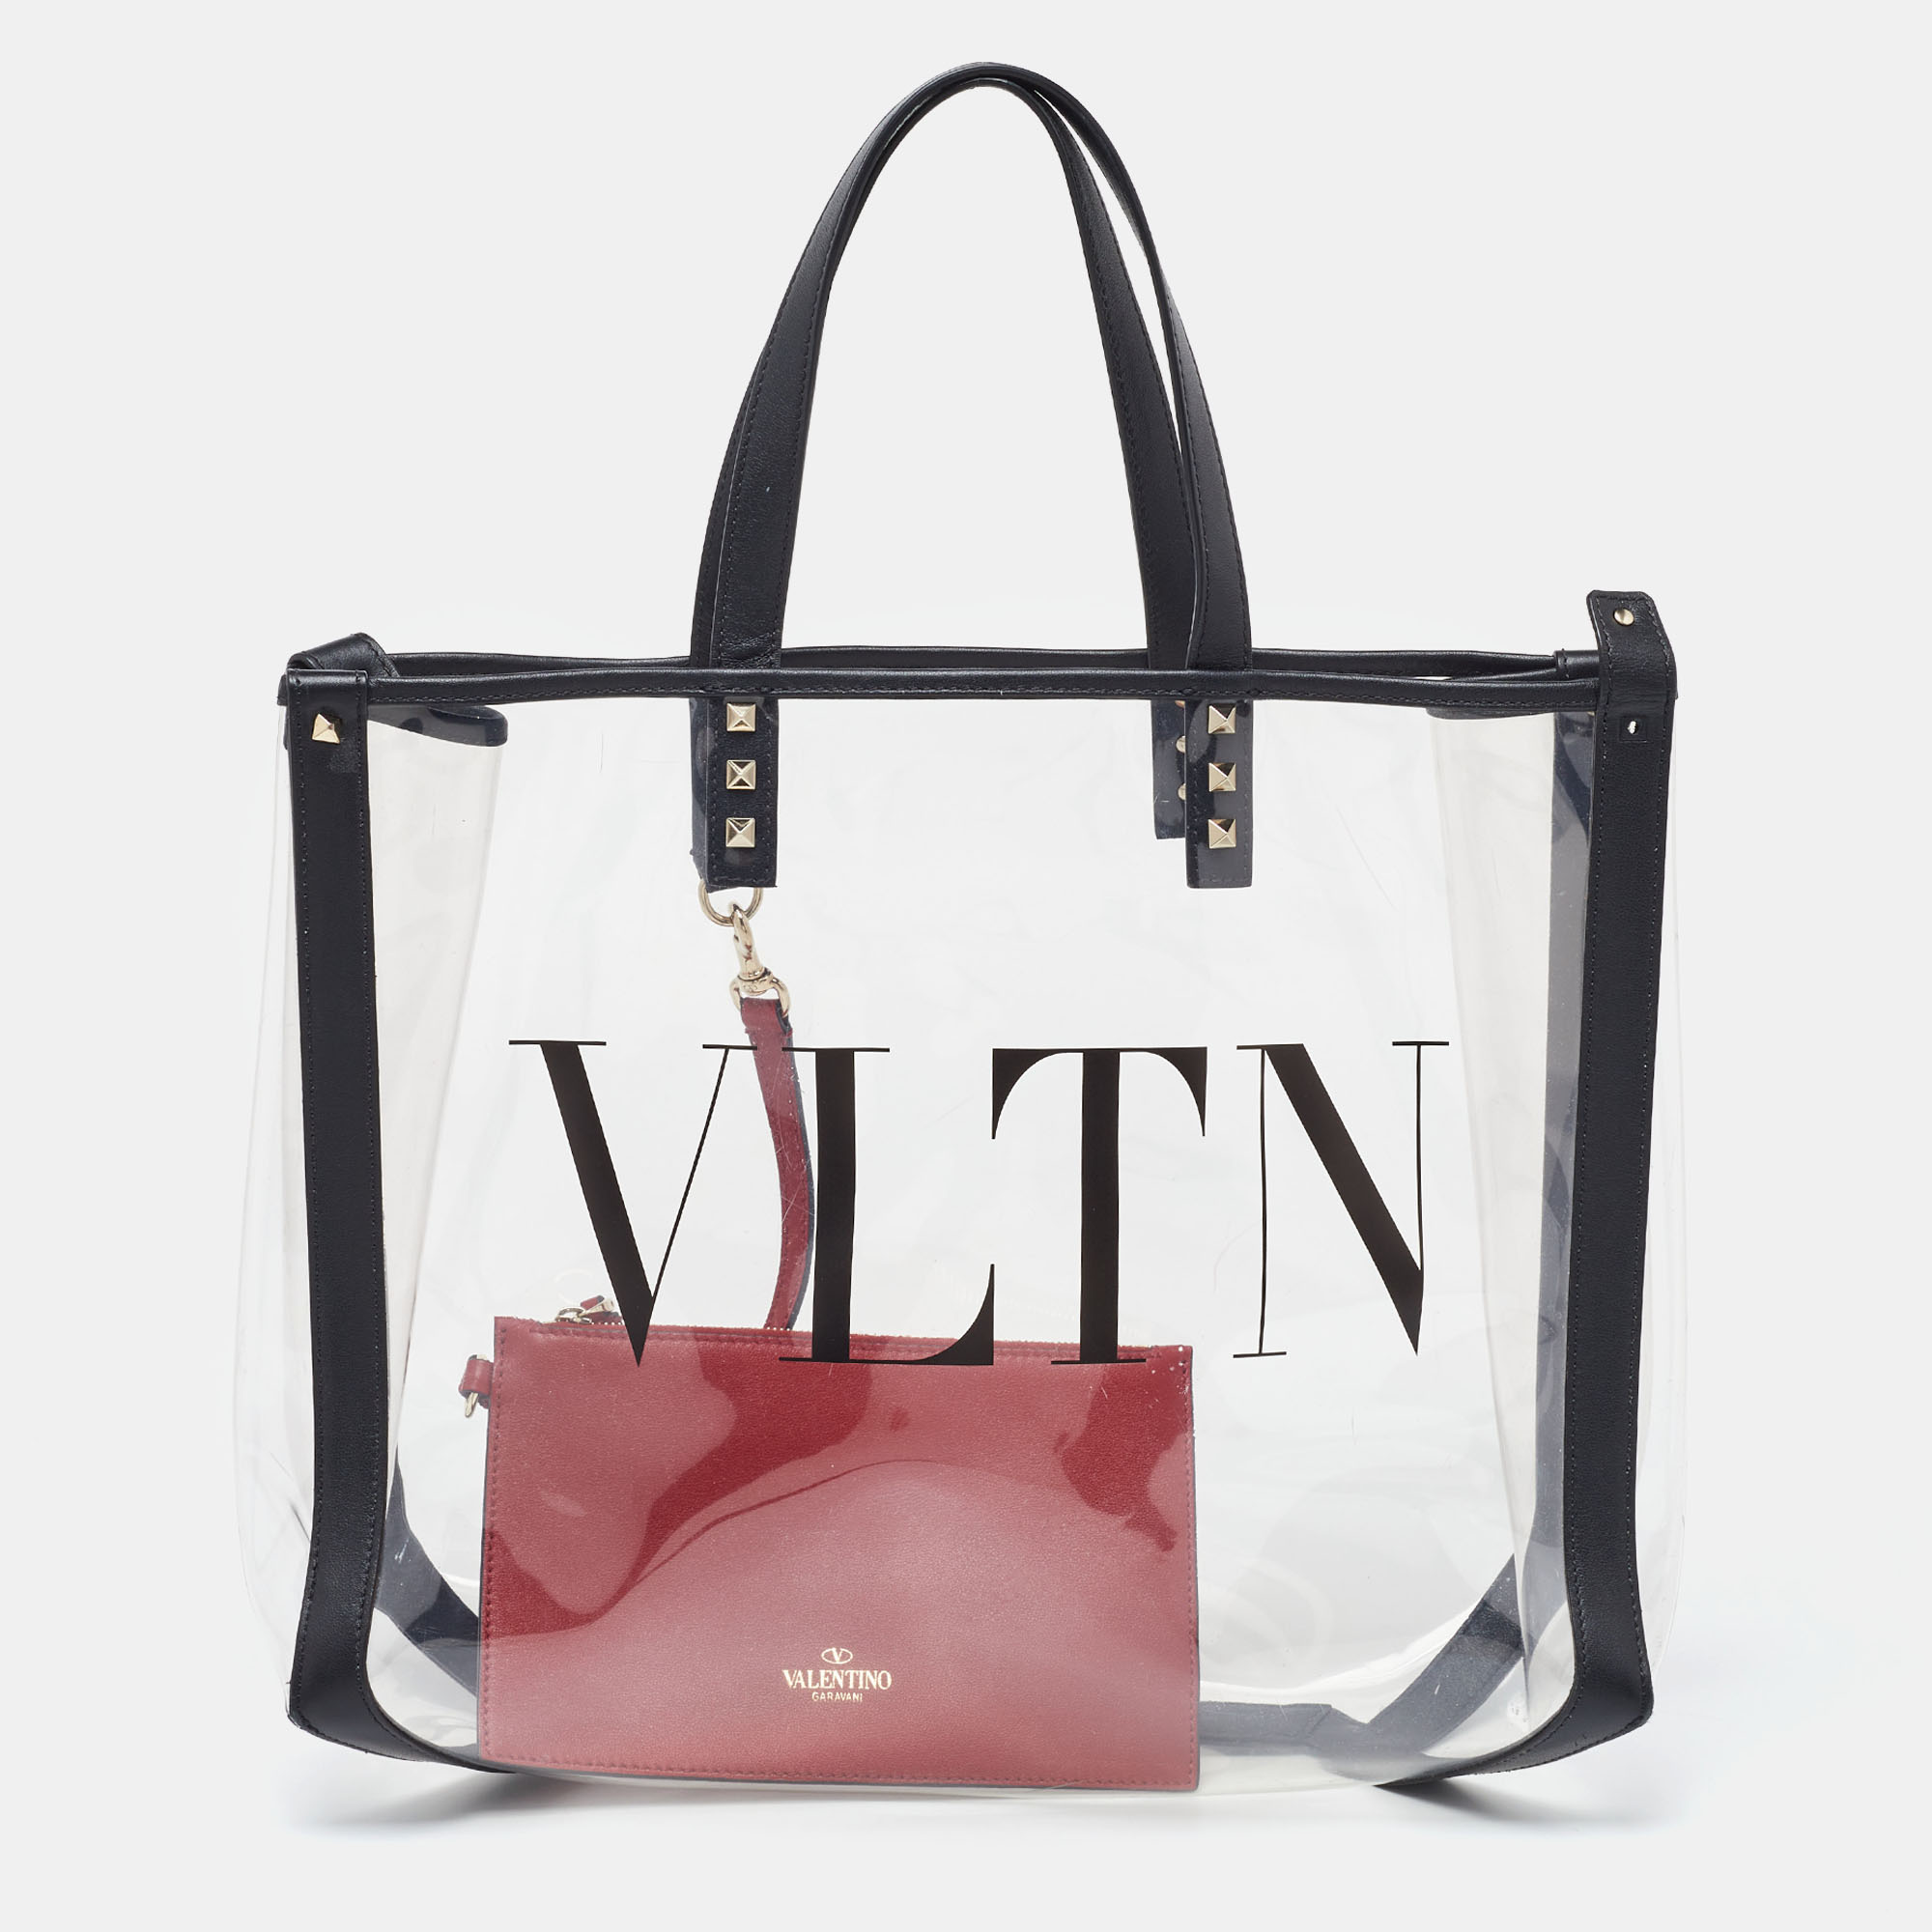 Valentino valenitno transparent/black pvc and leather vltn shopper tote